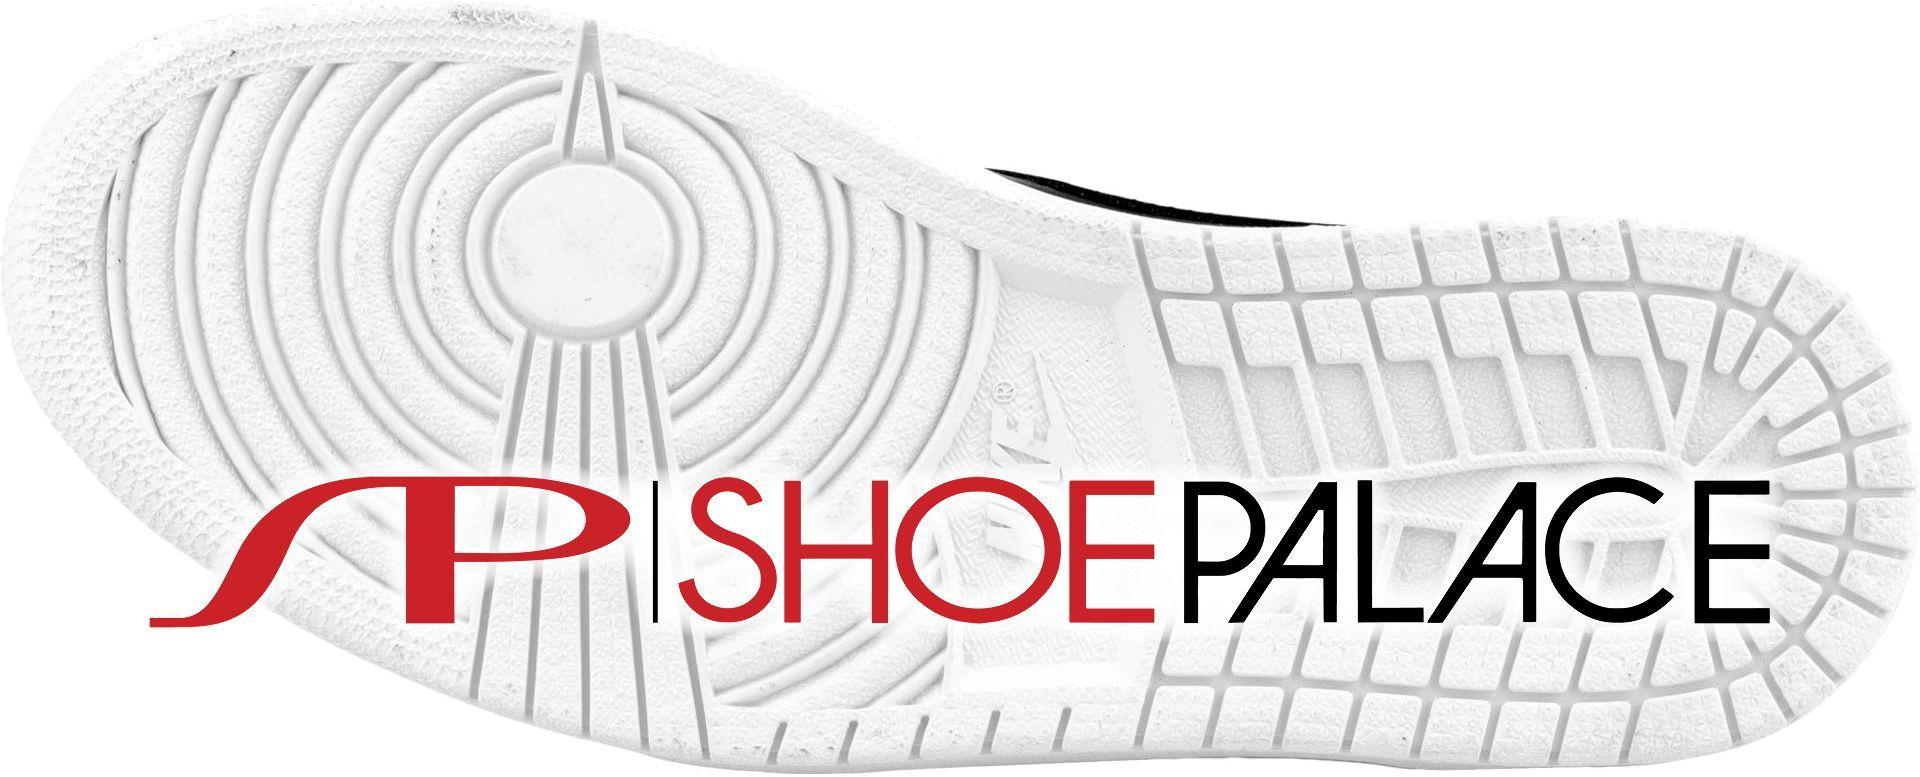 Shoe Palace Logo - Jordan 705329 010 Air Jordan Retro 1 Low OG Mens Basketball Shoe